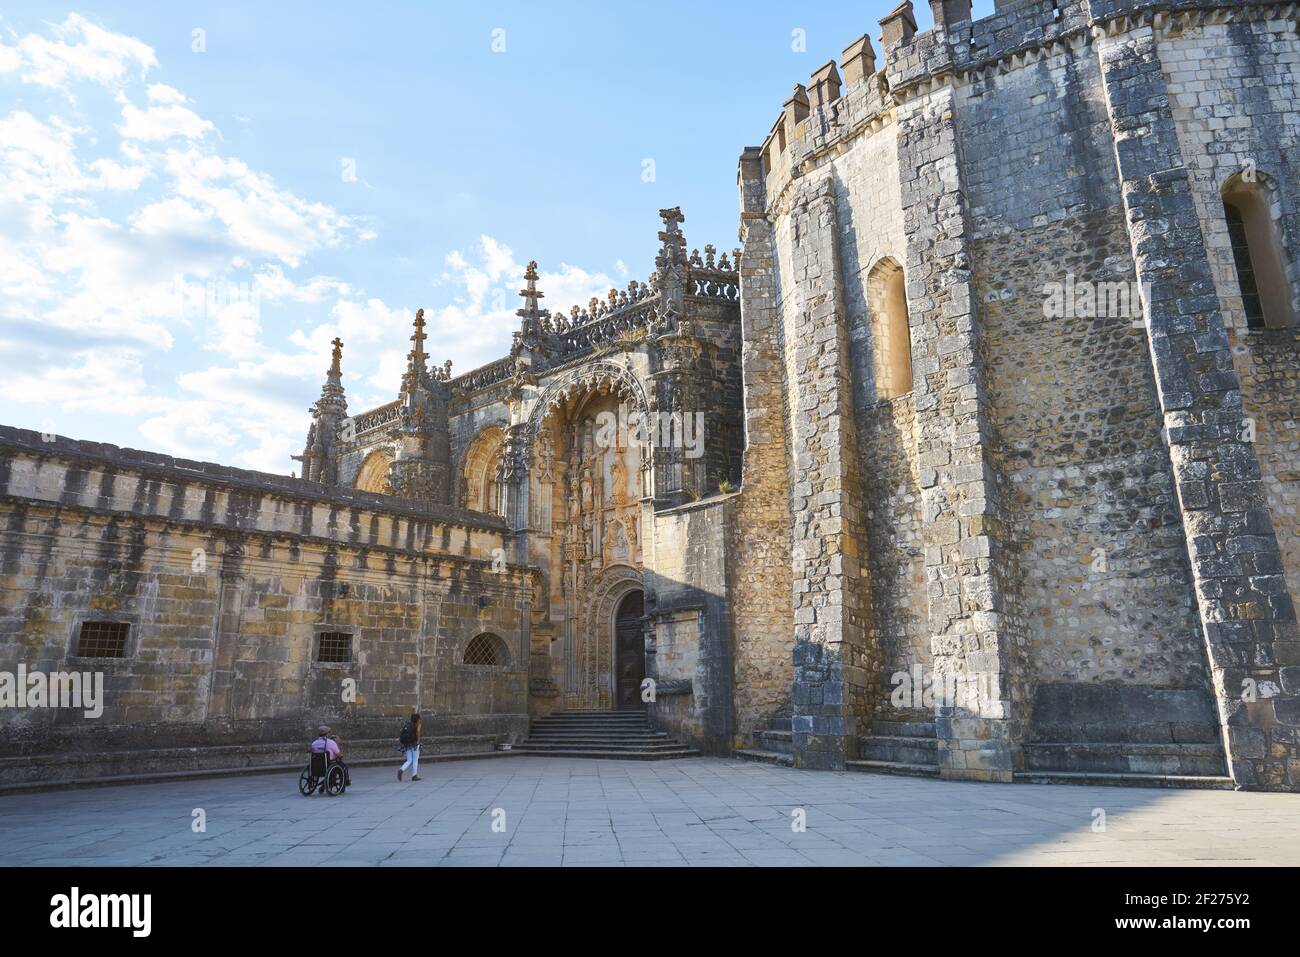 Tomar landmark cloister Convento de cristo christ convent, Portugal Stock Photo